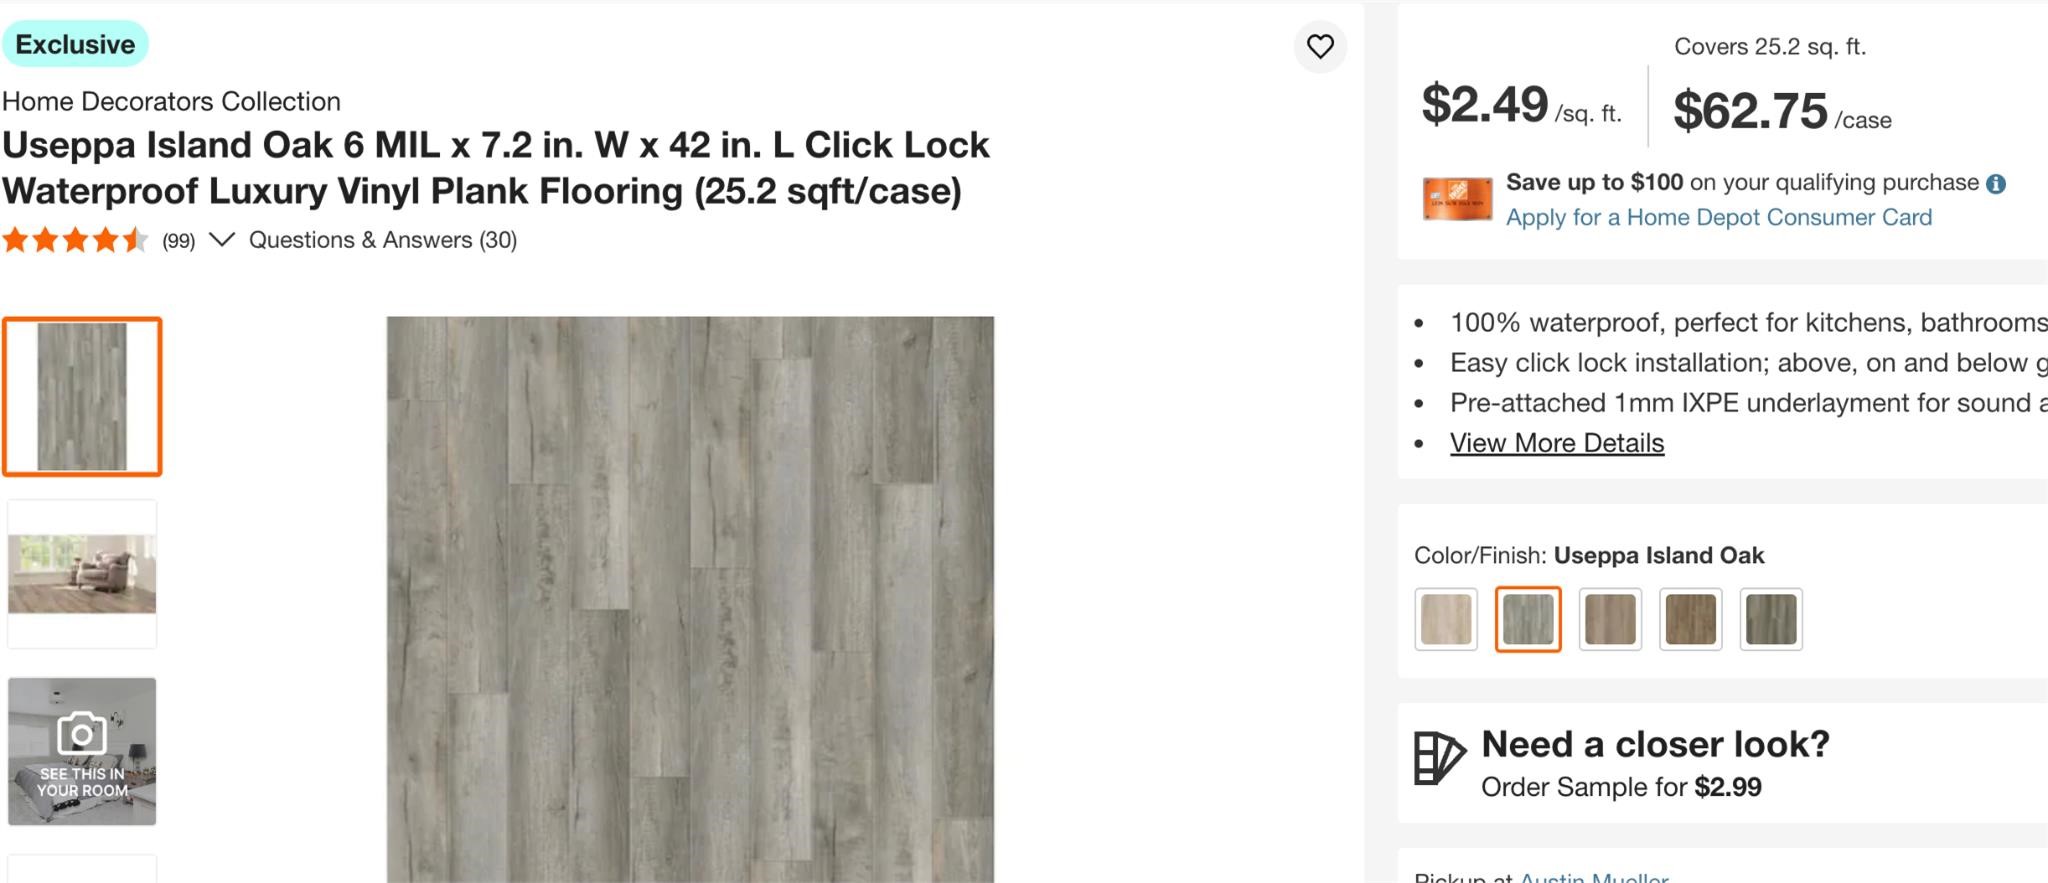 Vinyl Plank Flooring (25.2 sqft/case) $62.75/case